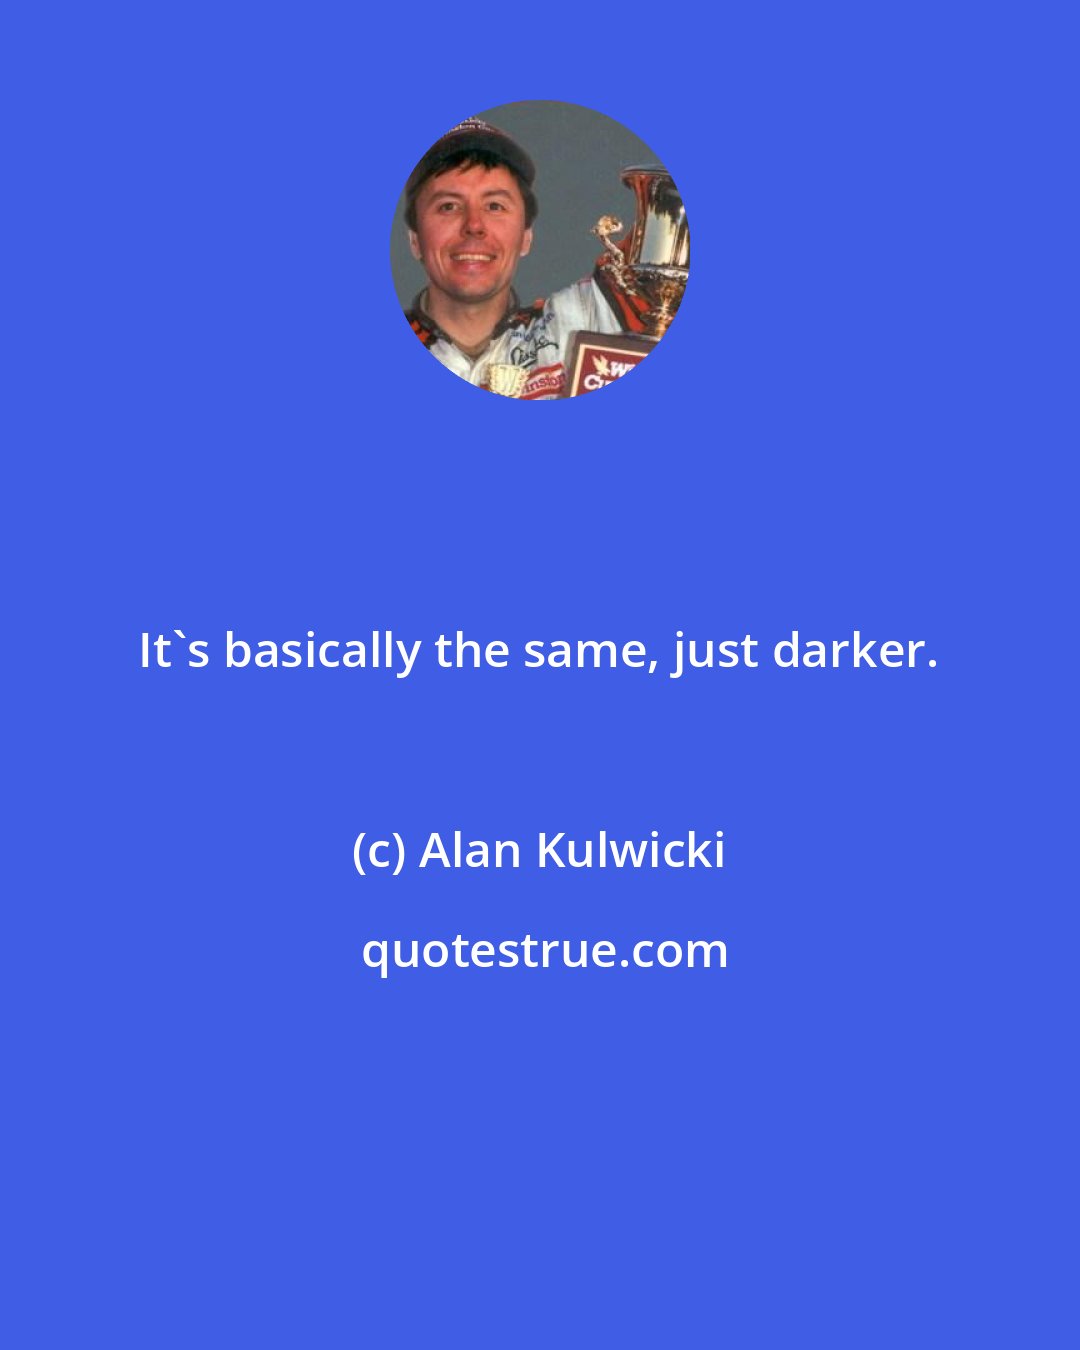 Alan Kulwicki: It's basically the same, just darker.